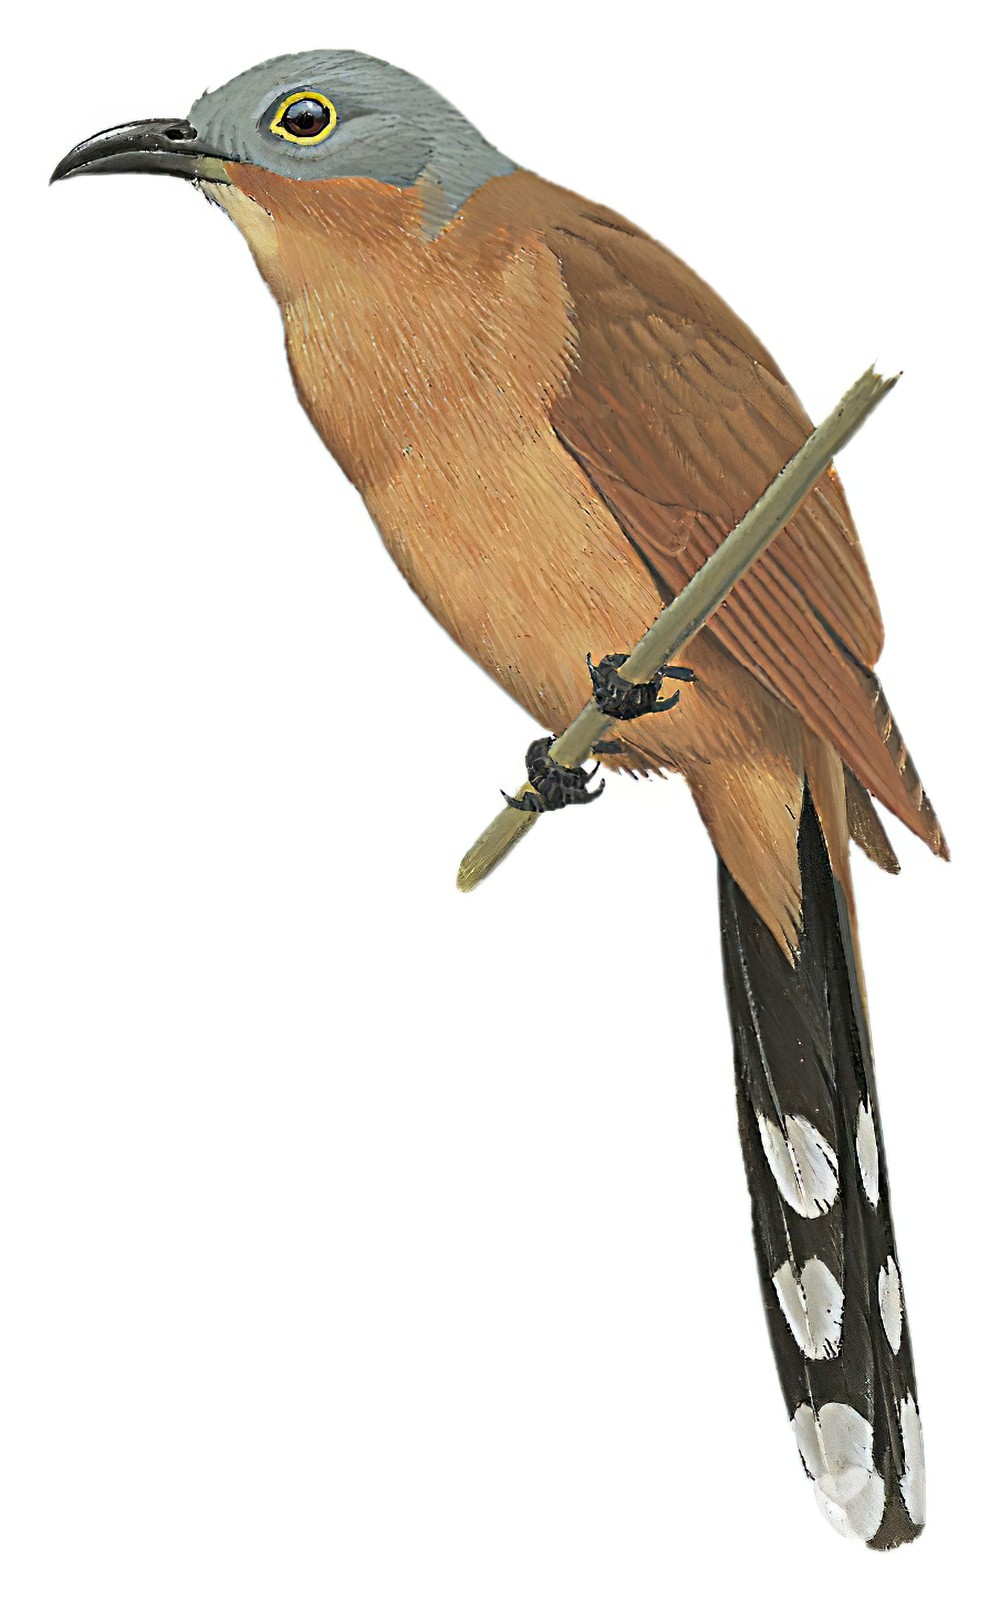 Gray-capped Cuckoo / Coccyzus lansbergi